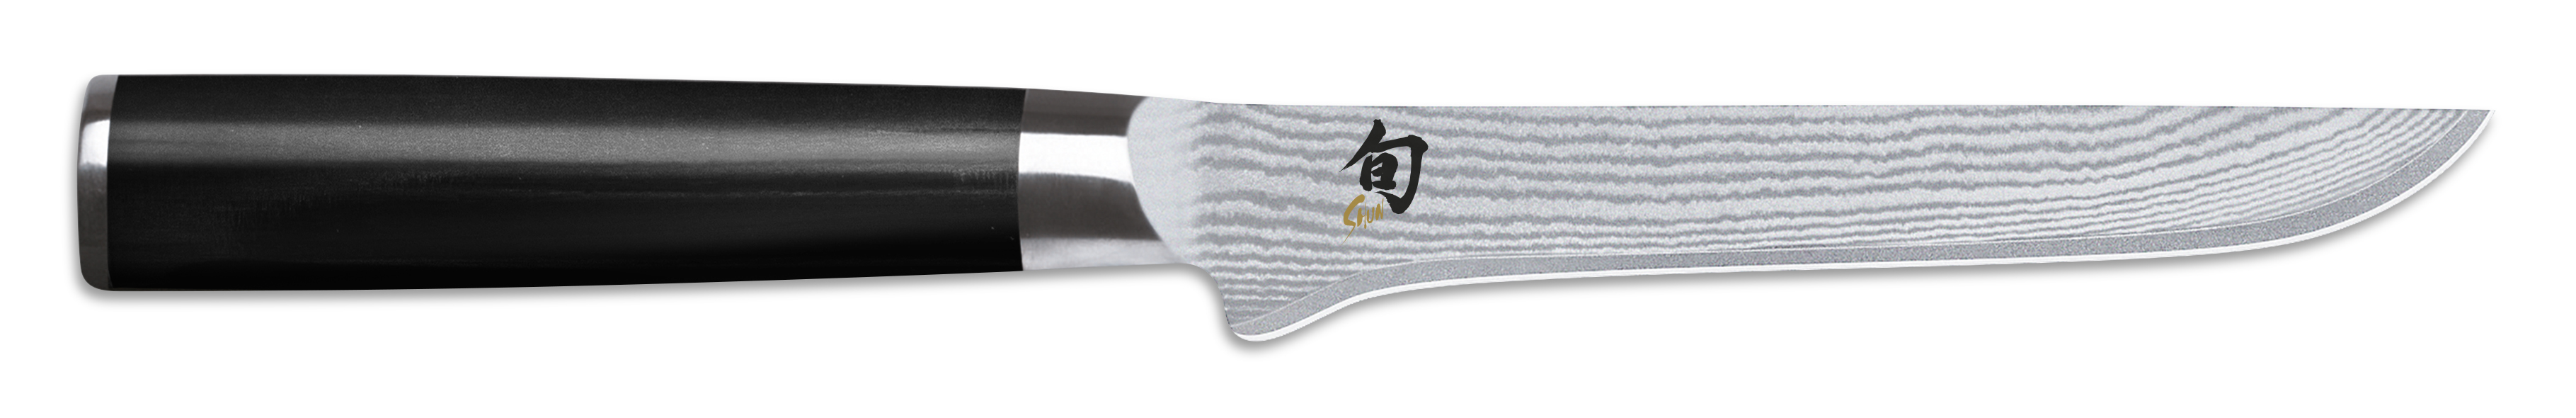 KAI - DM-0710: SHUN Kochmesser / Cook Knife Ausbeinmesser 6 (15,0 cm)